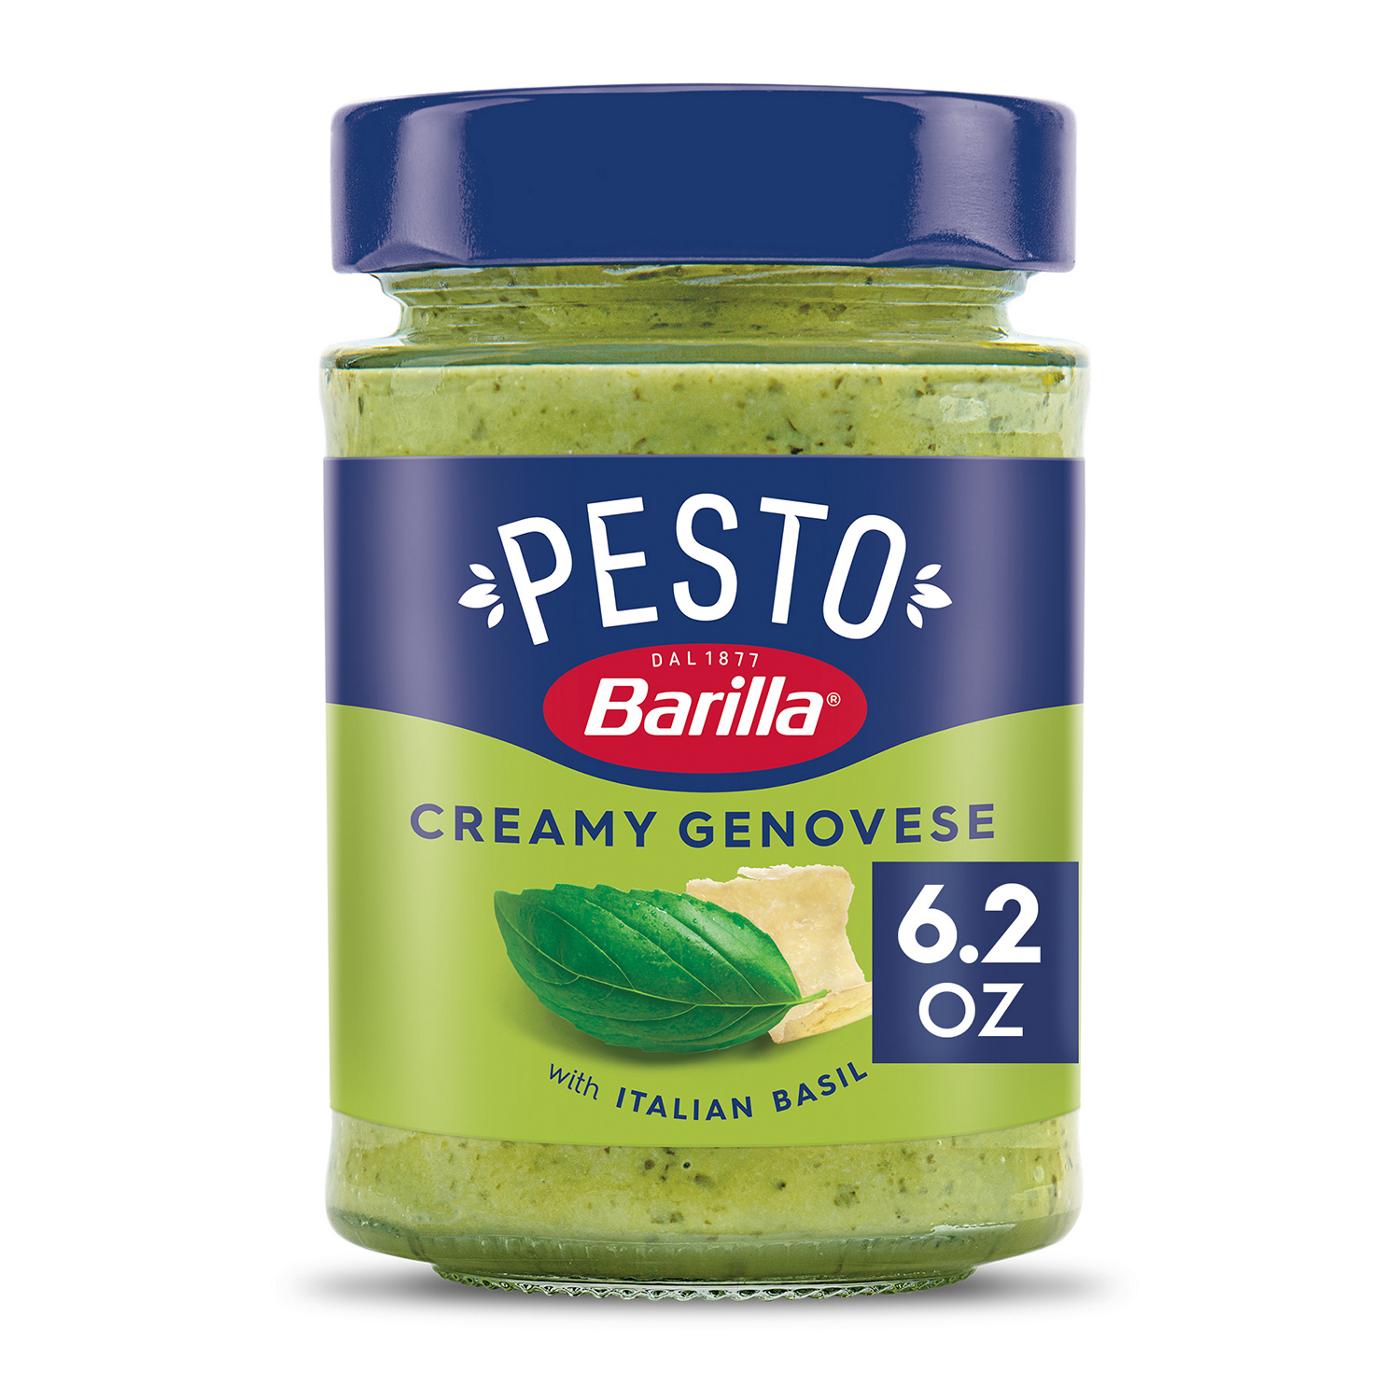 Barilla Creamy Genovese Pesto Sauce & Spread; image 1 of 5